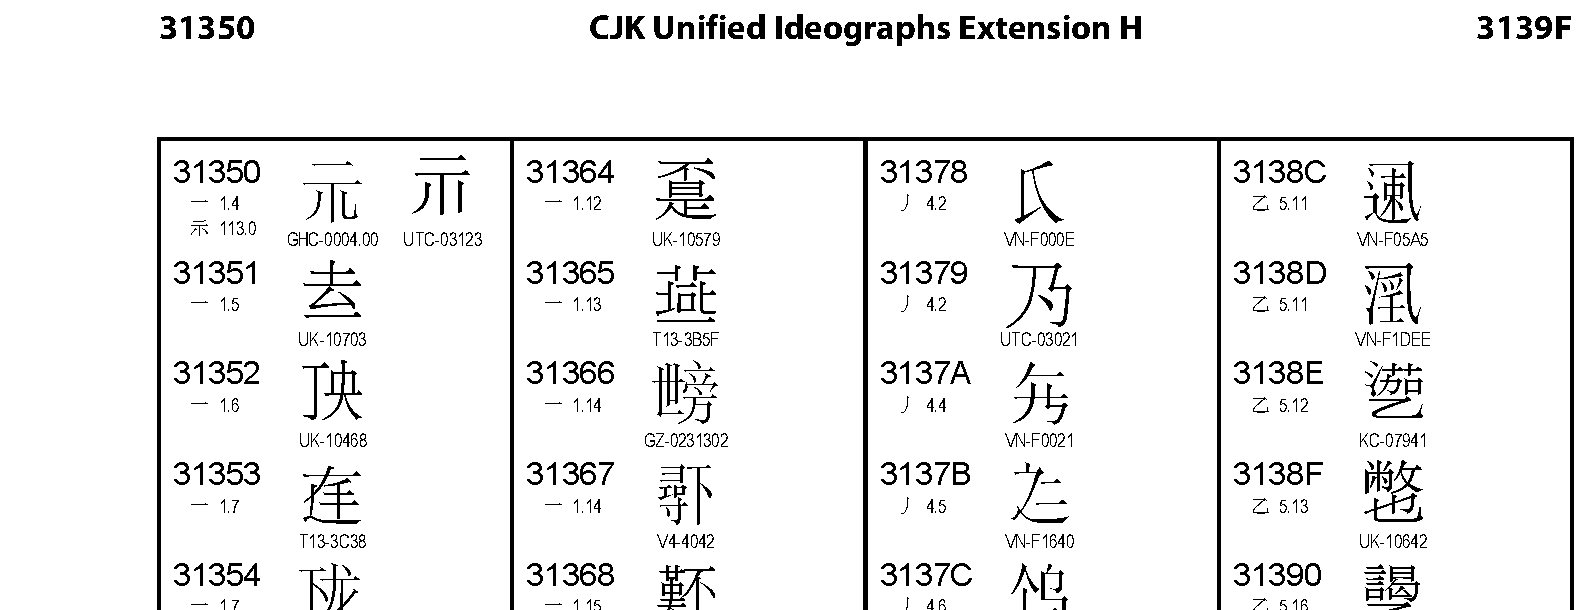 Unicode - CJK Unified Ideographs Extension H